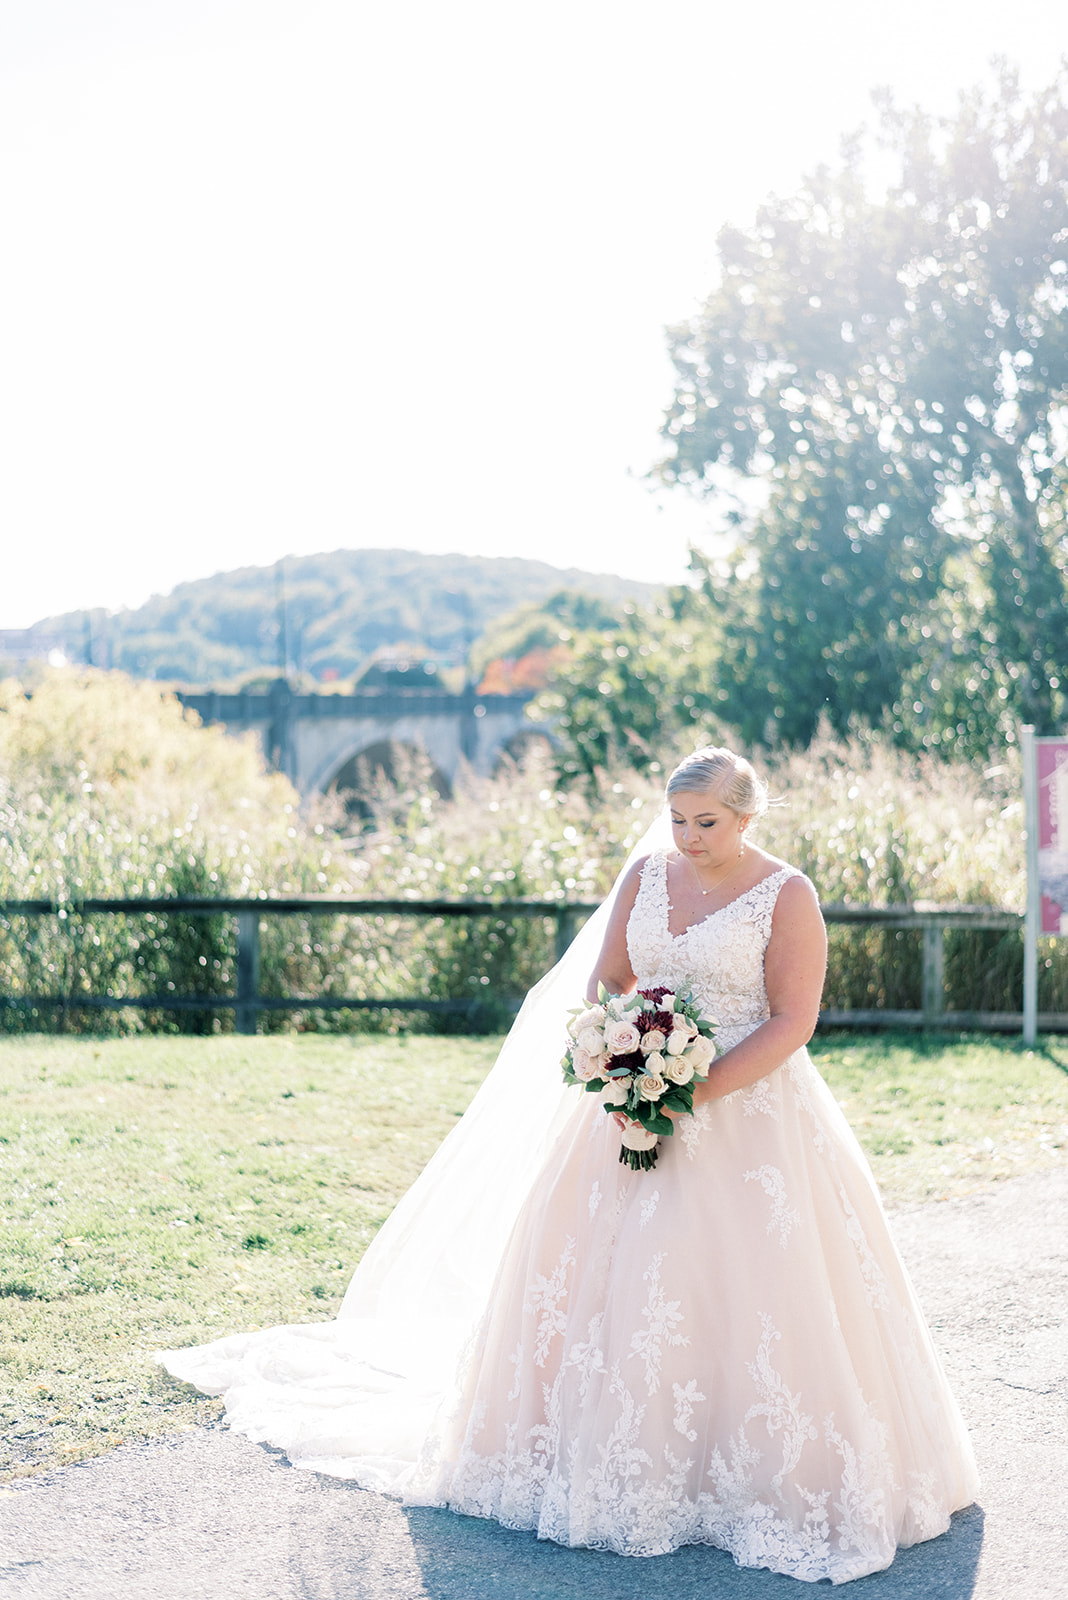 Pennsylvania wedding photographer captures bride holding bouquet